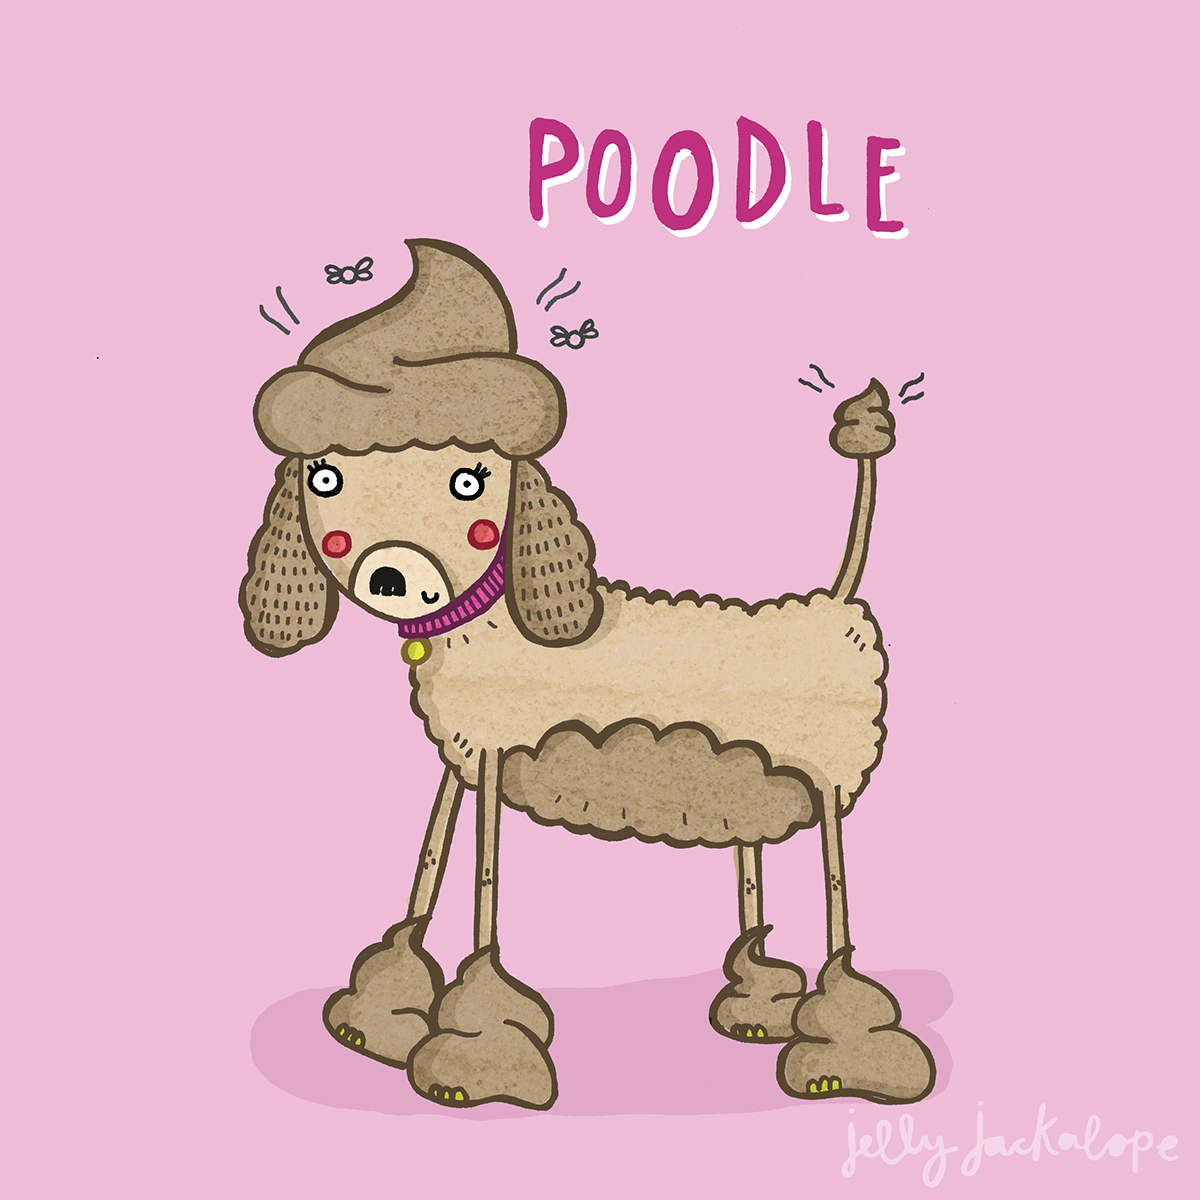 ILLUSTRATION  puns punny animals humour Character Wordplay